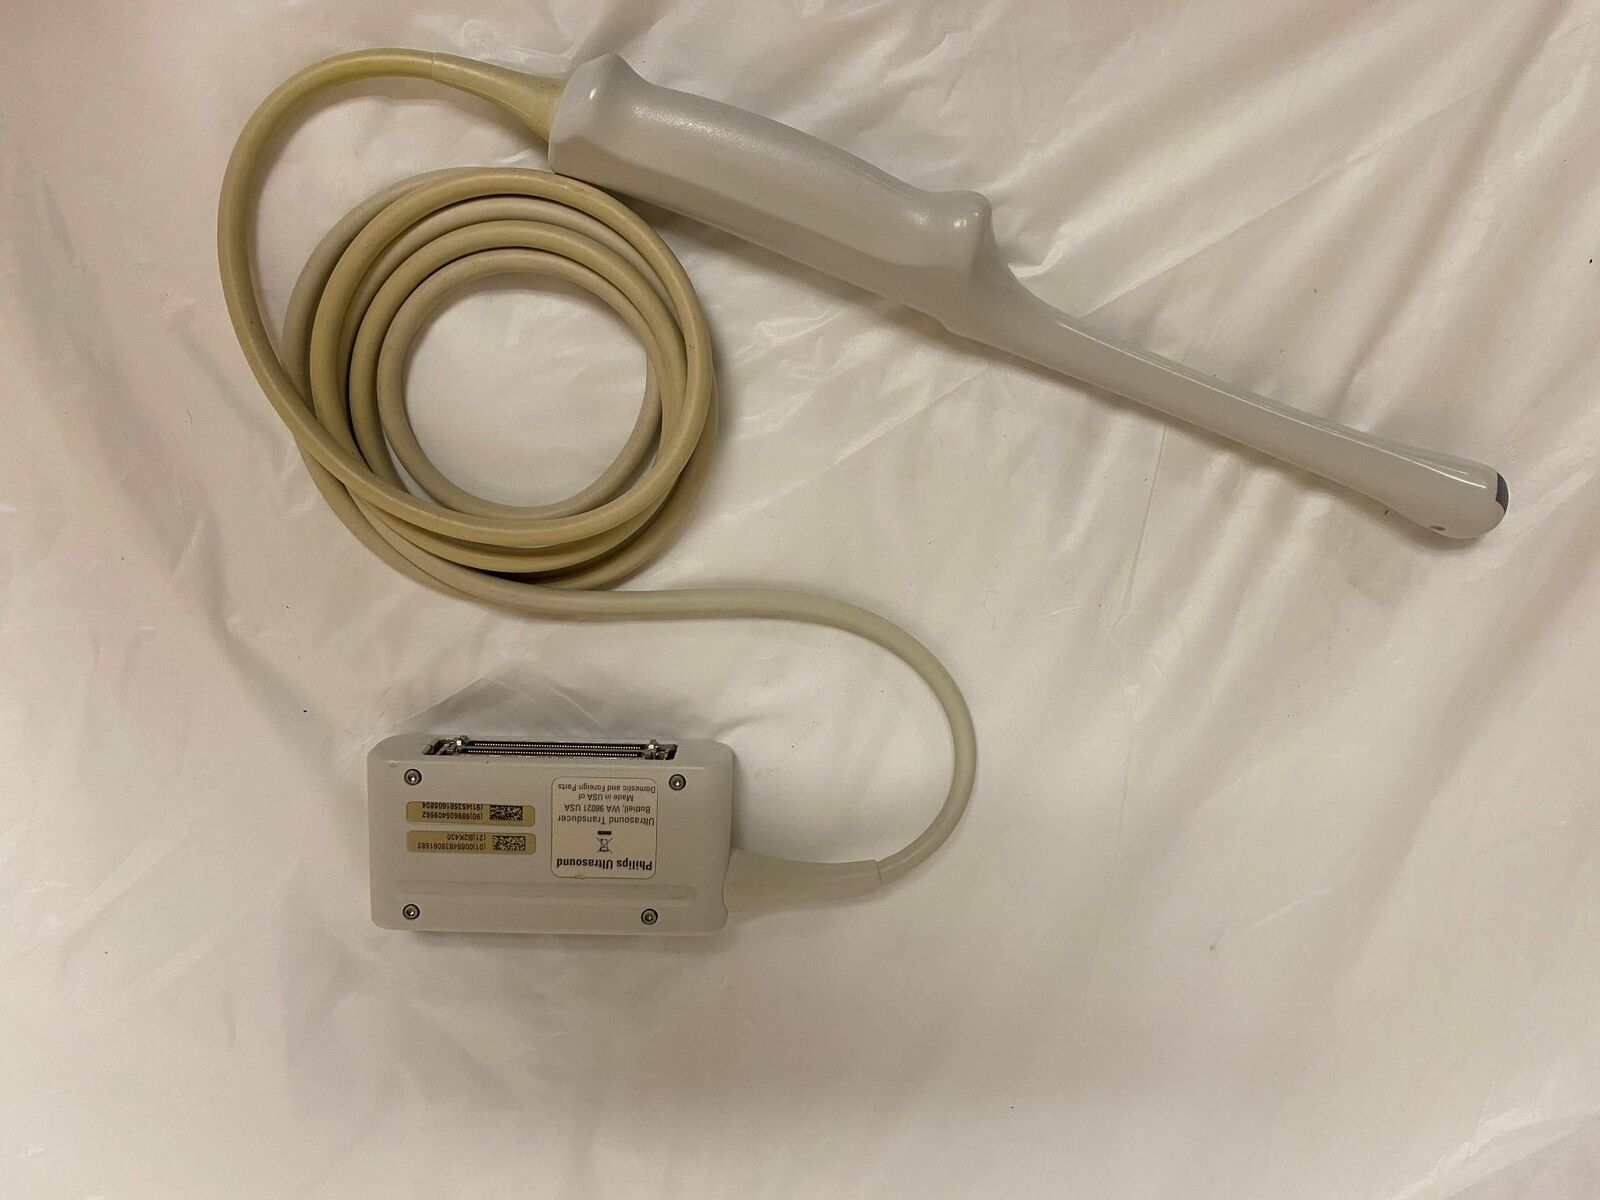 Philips C10-3V Trans Vaginal Probe Transducer DIAGNOSTIC ULTRASOUND MACHINES FOR SALE